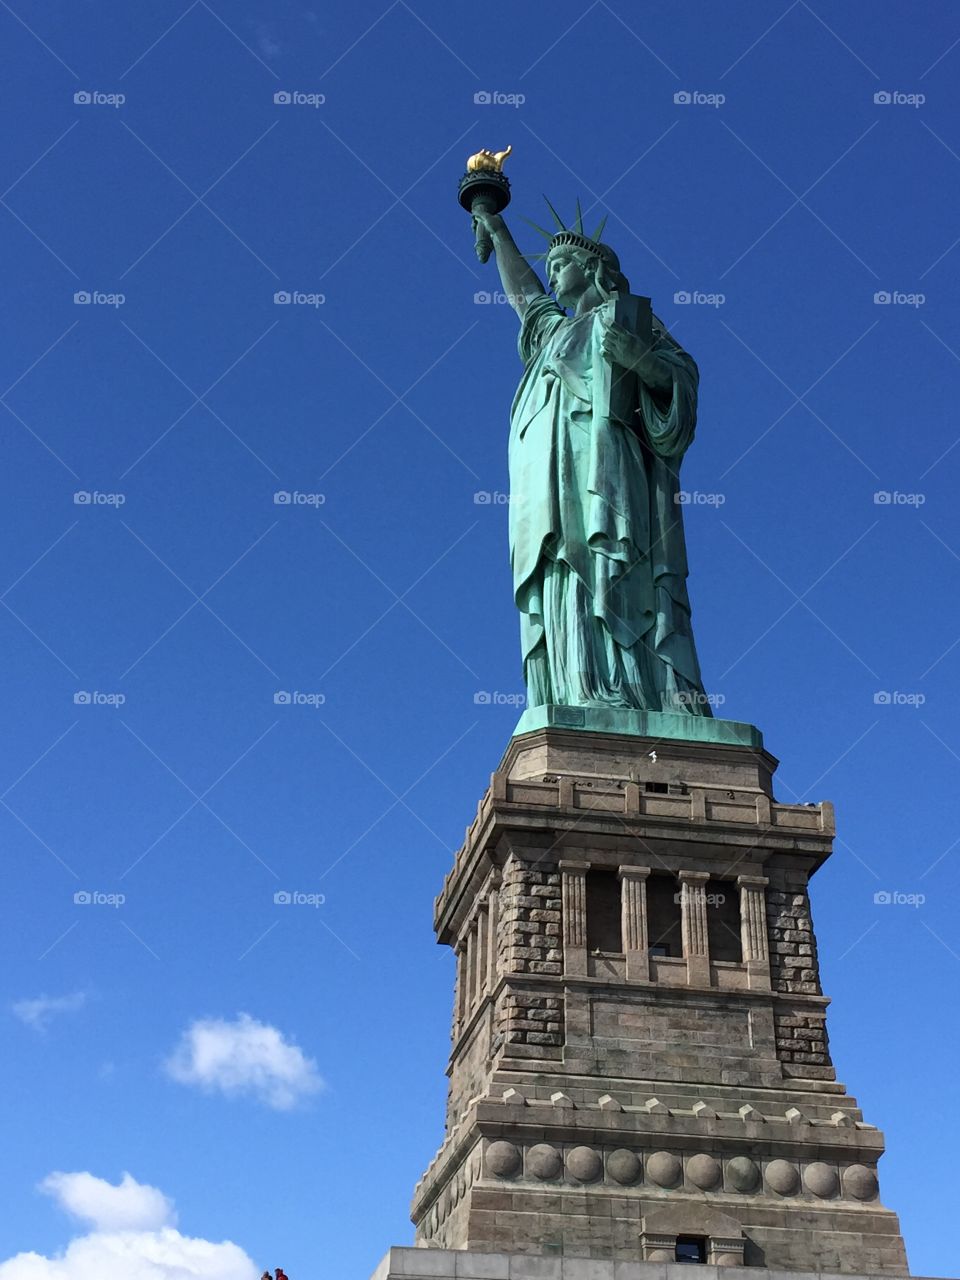 Statue of Liberty, New York 